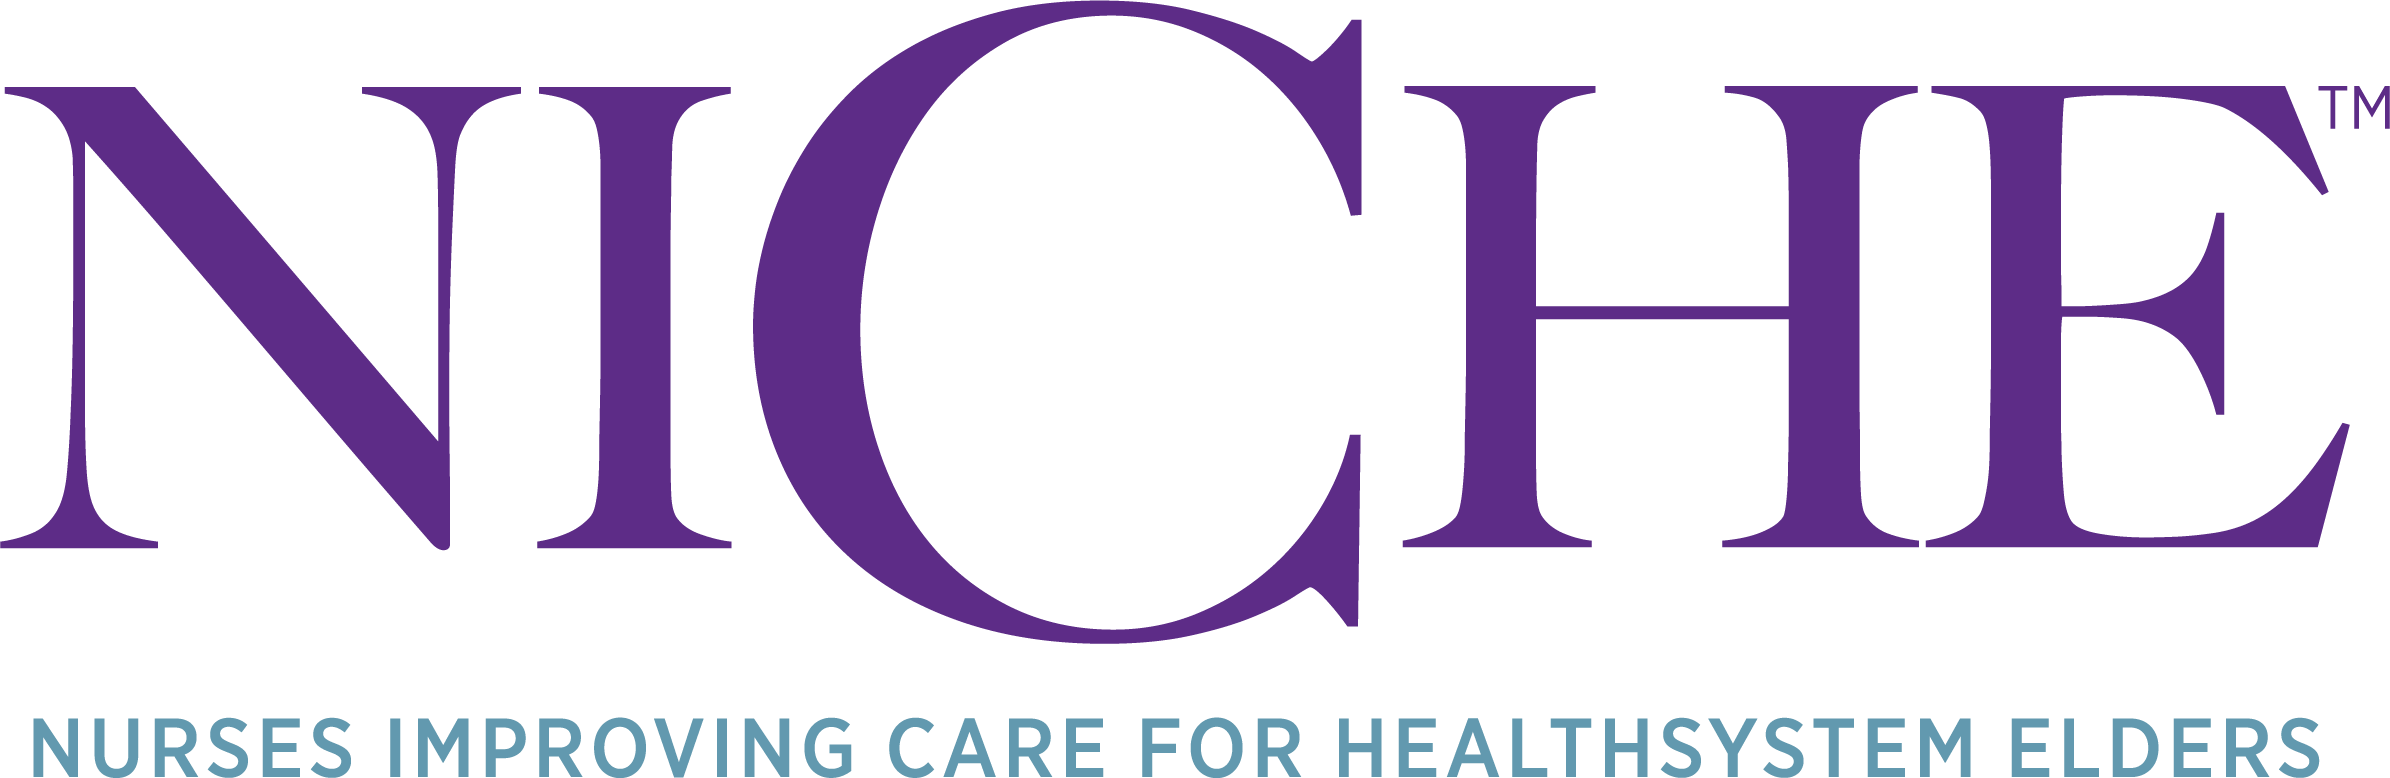 Nurses improving care for healthsystem elders logo